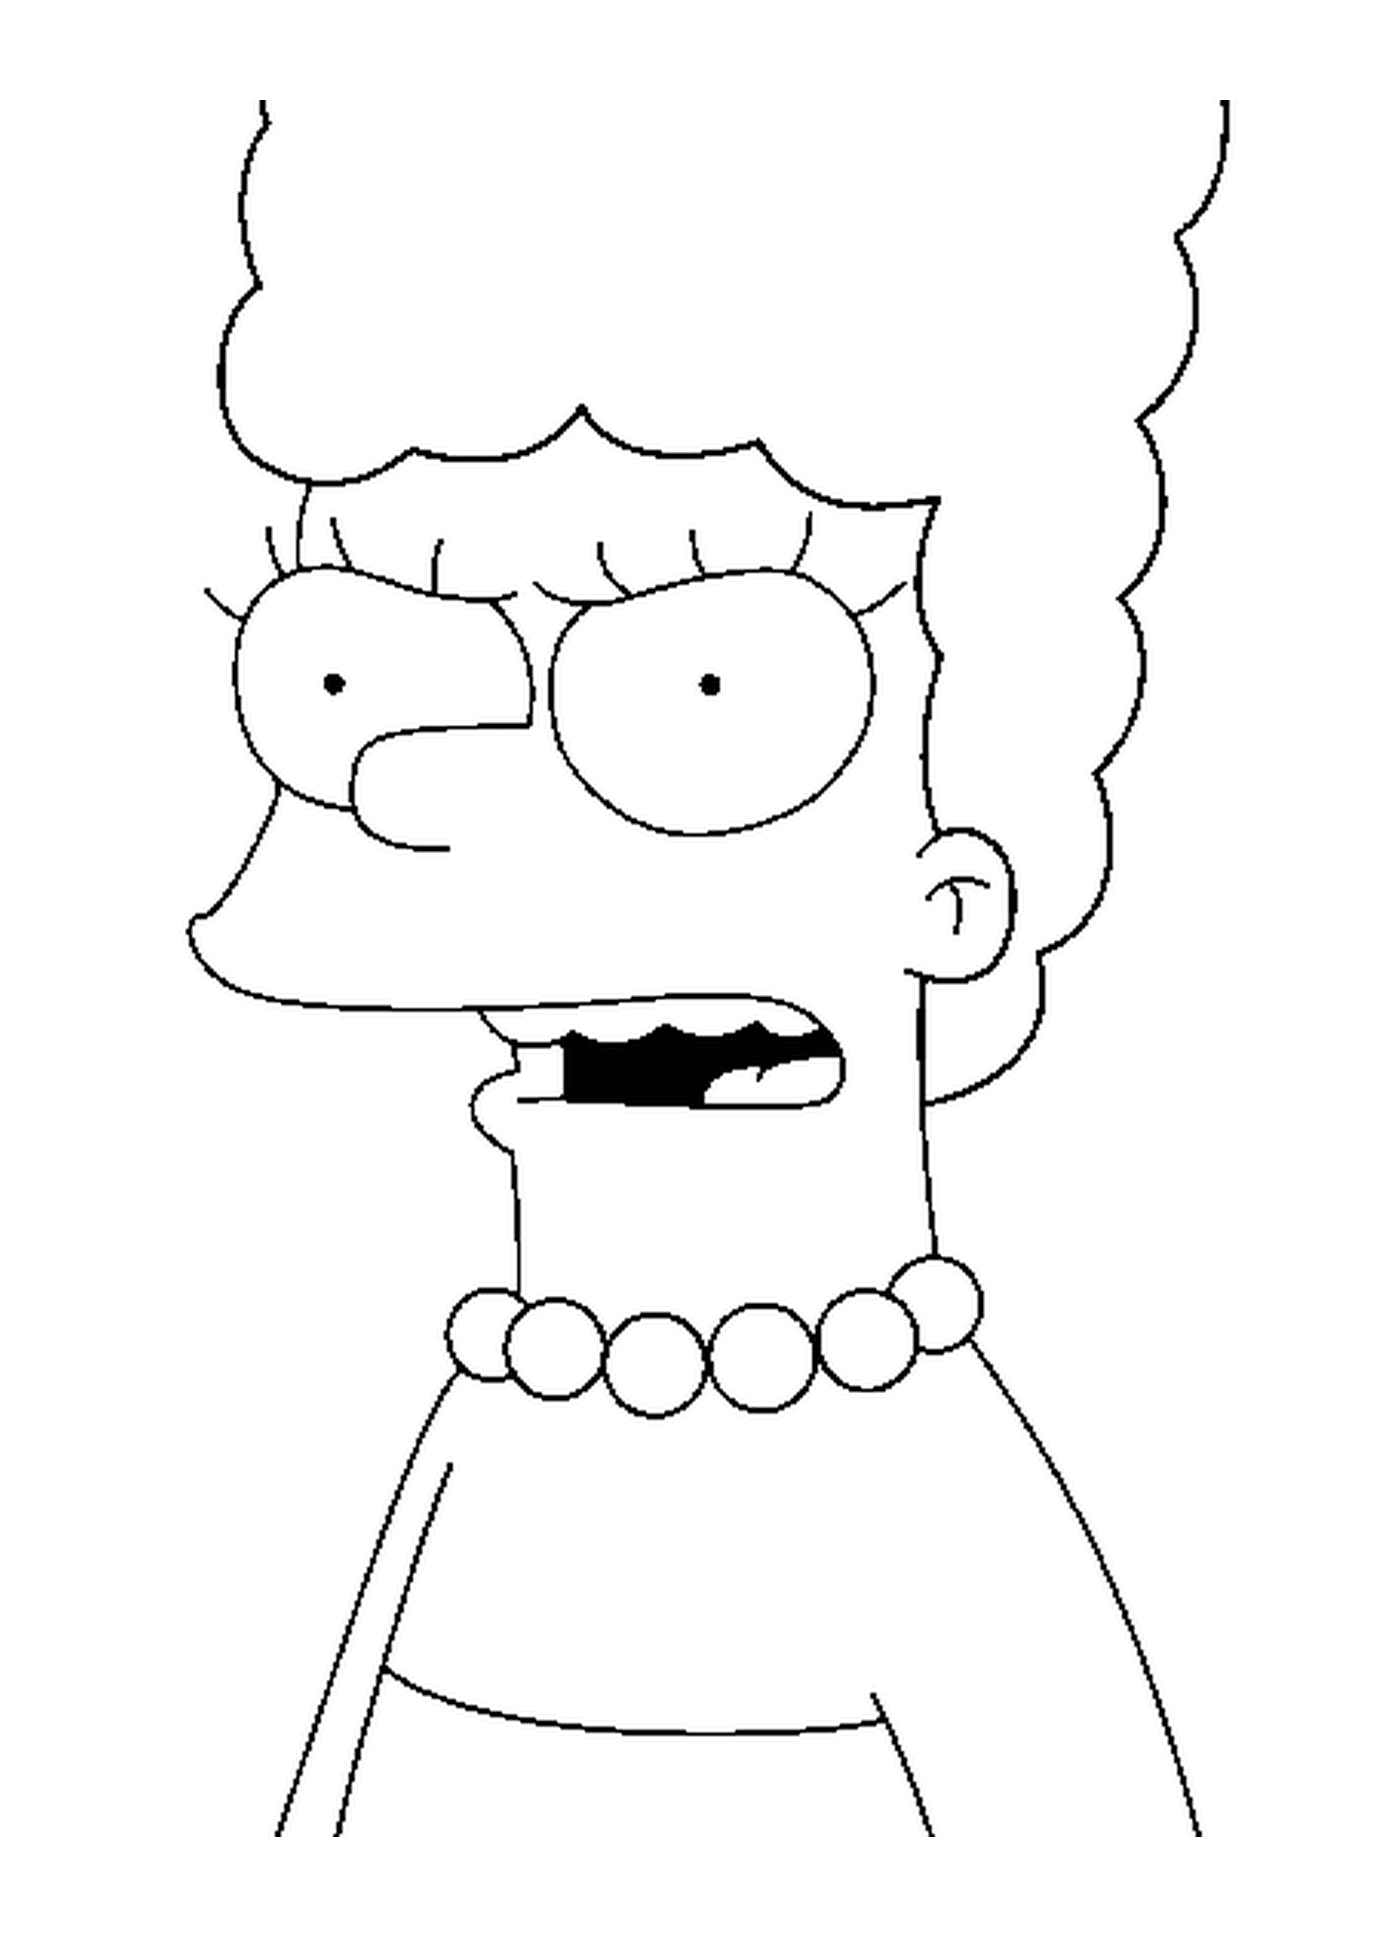  Marge macht große Augen 